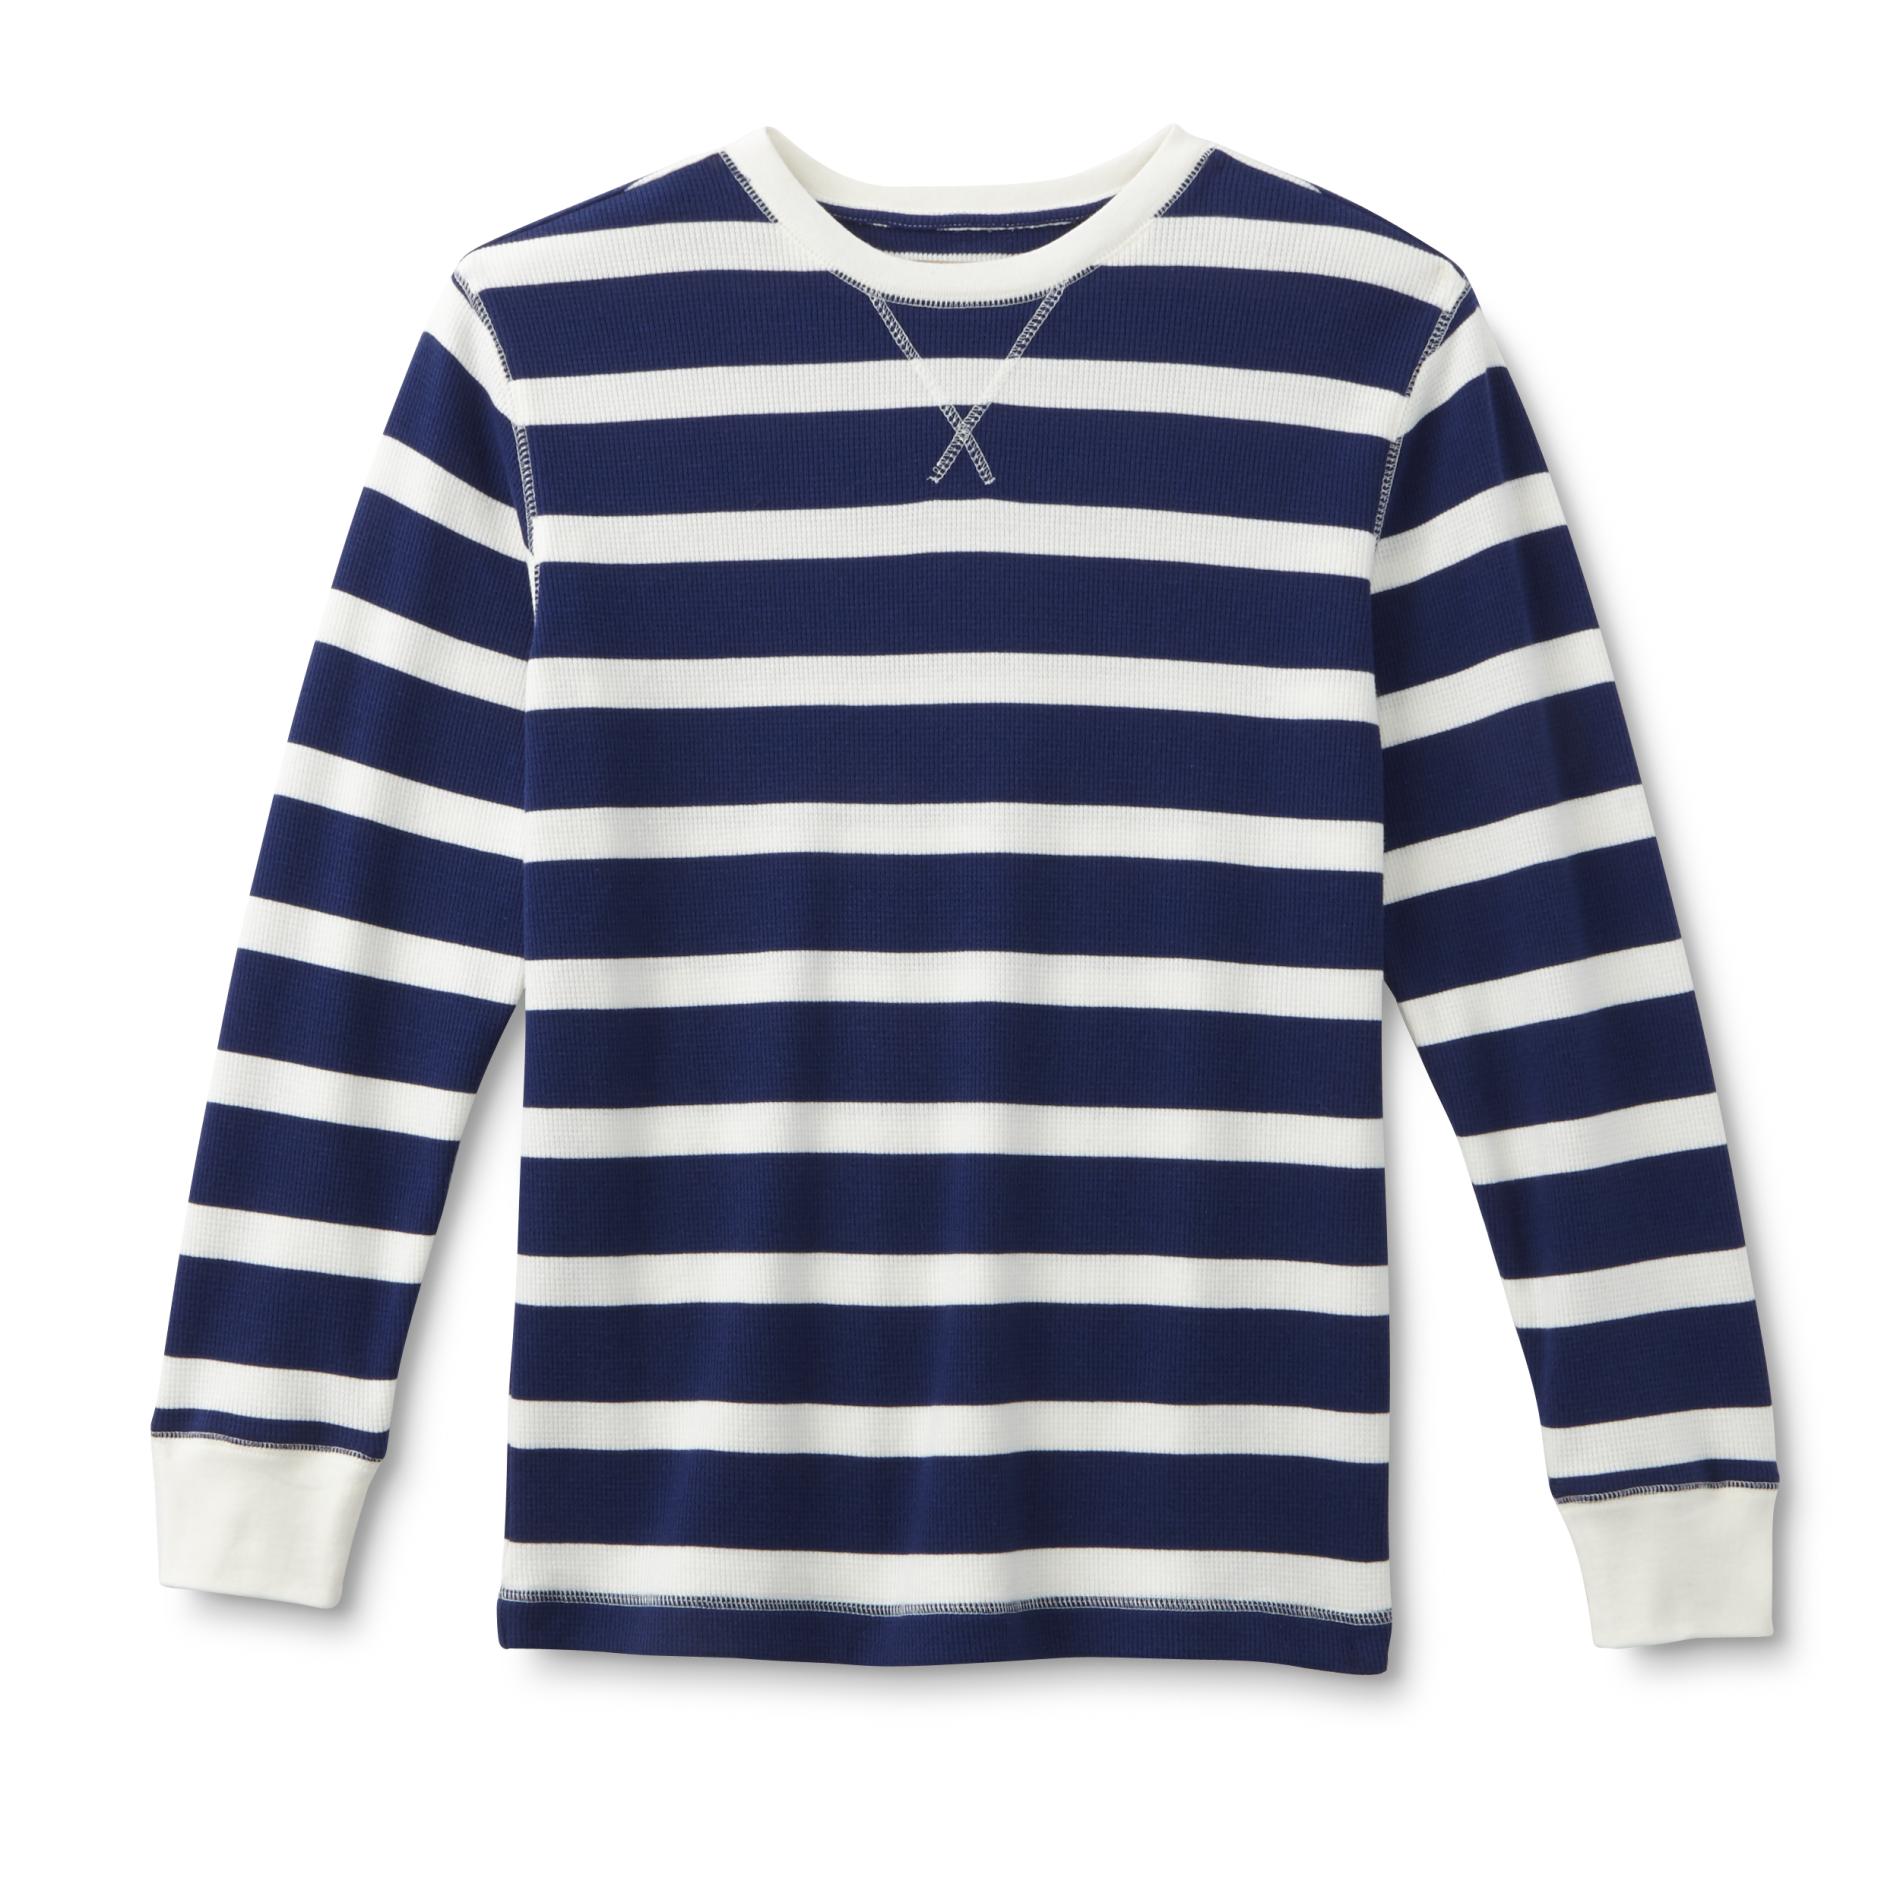 Roebuck & Co. Boy's Long-Sleeve Thermal T-Shirt - Striped